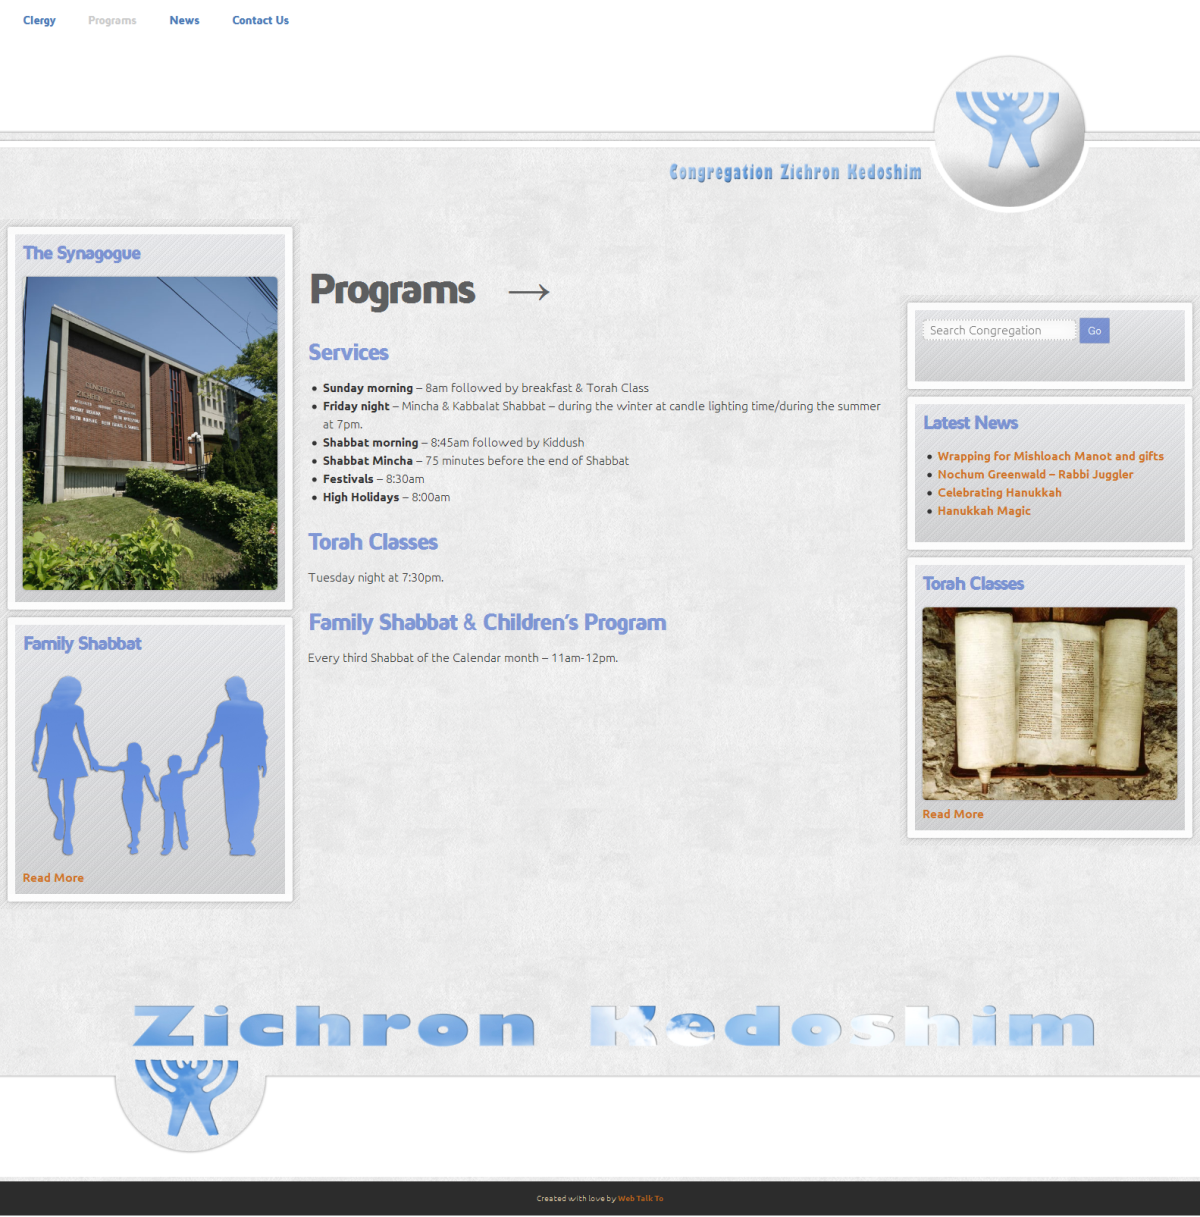 2 Zichron Kedoshim website version 2.1